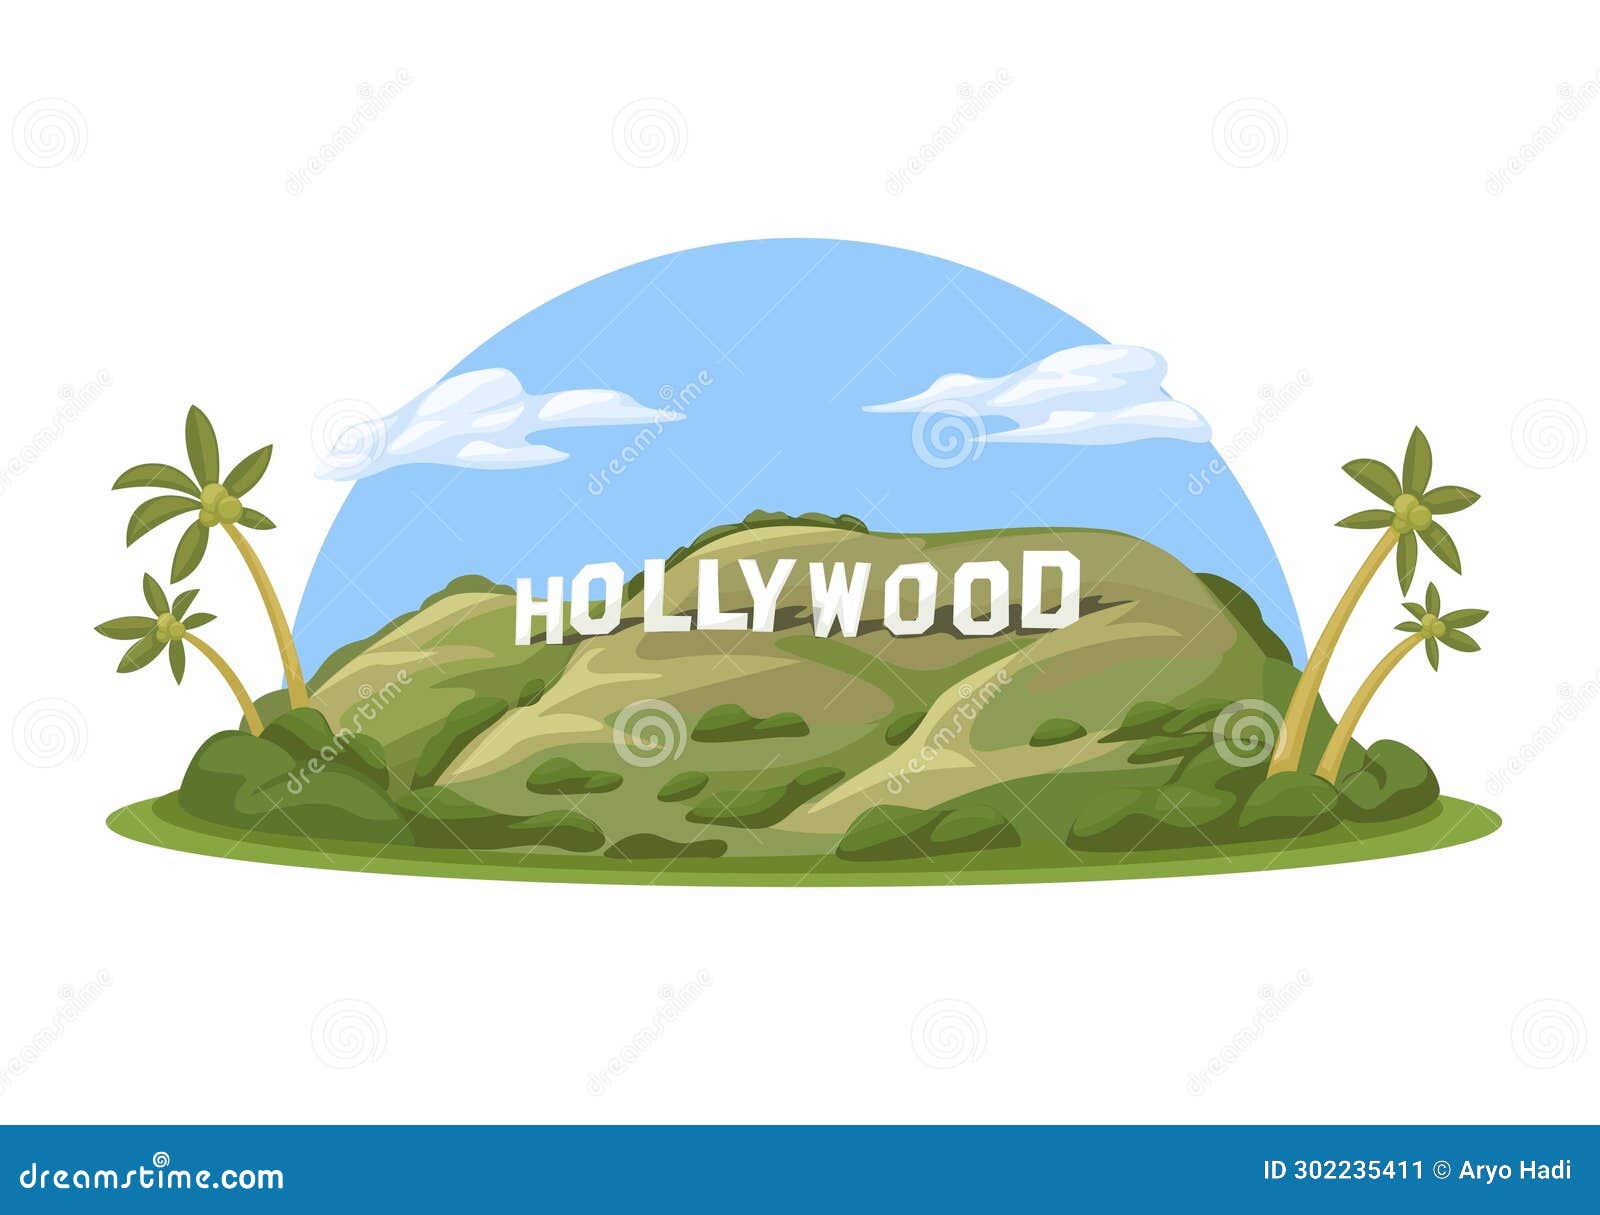 Hollywood Sign Los Angeles Landmark Illustration Vector Stock Vector